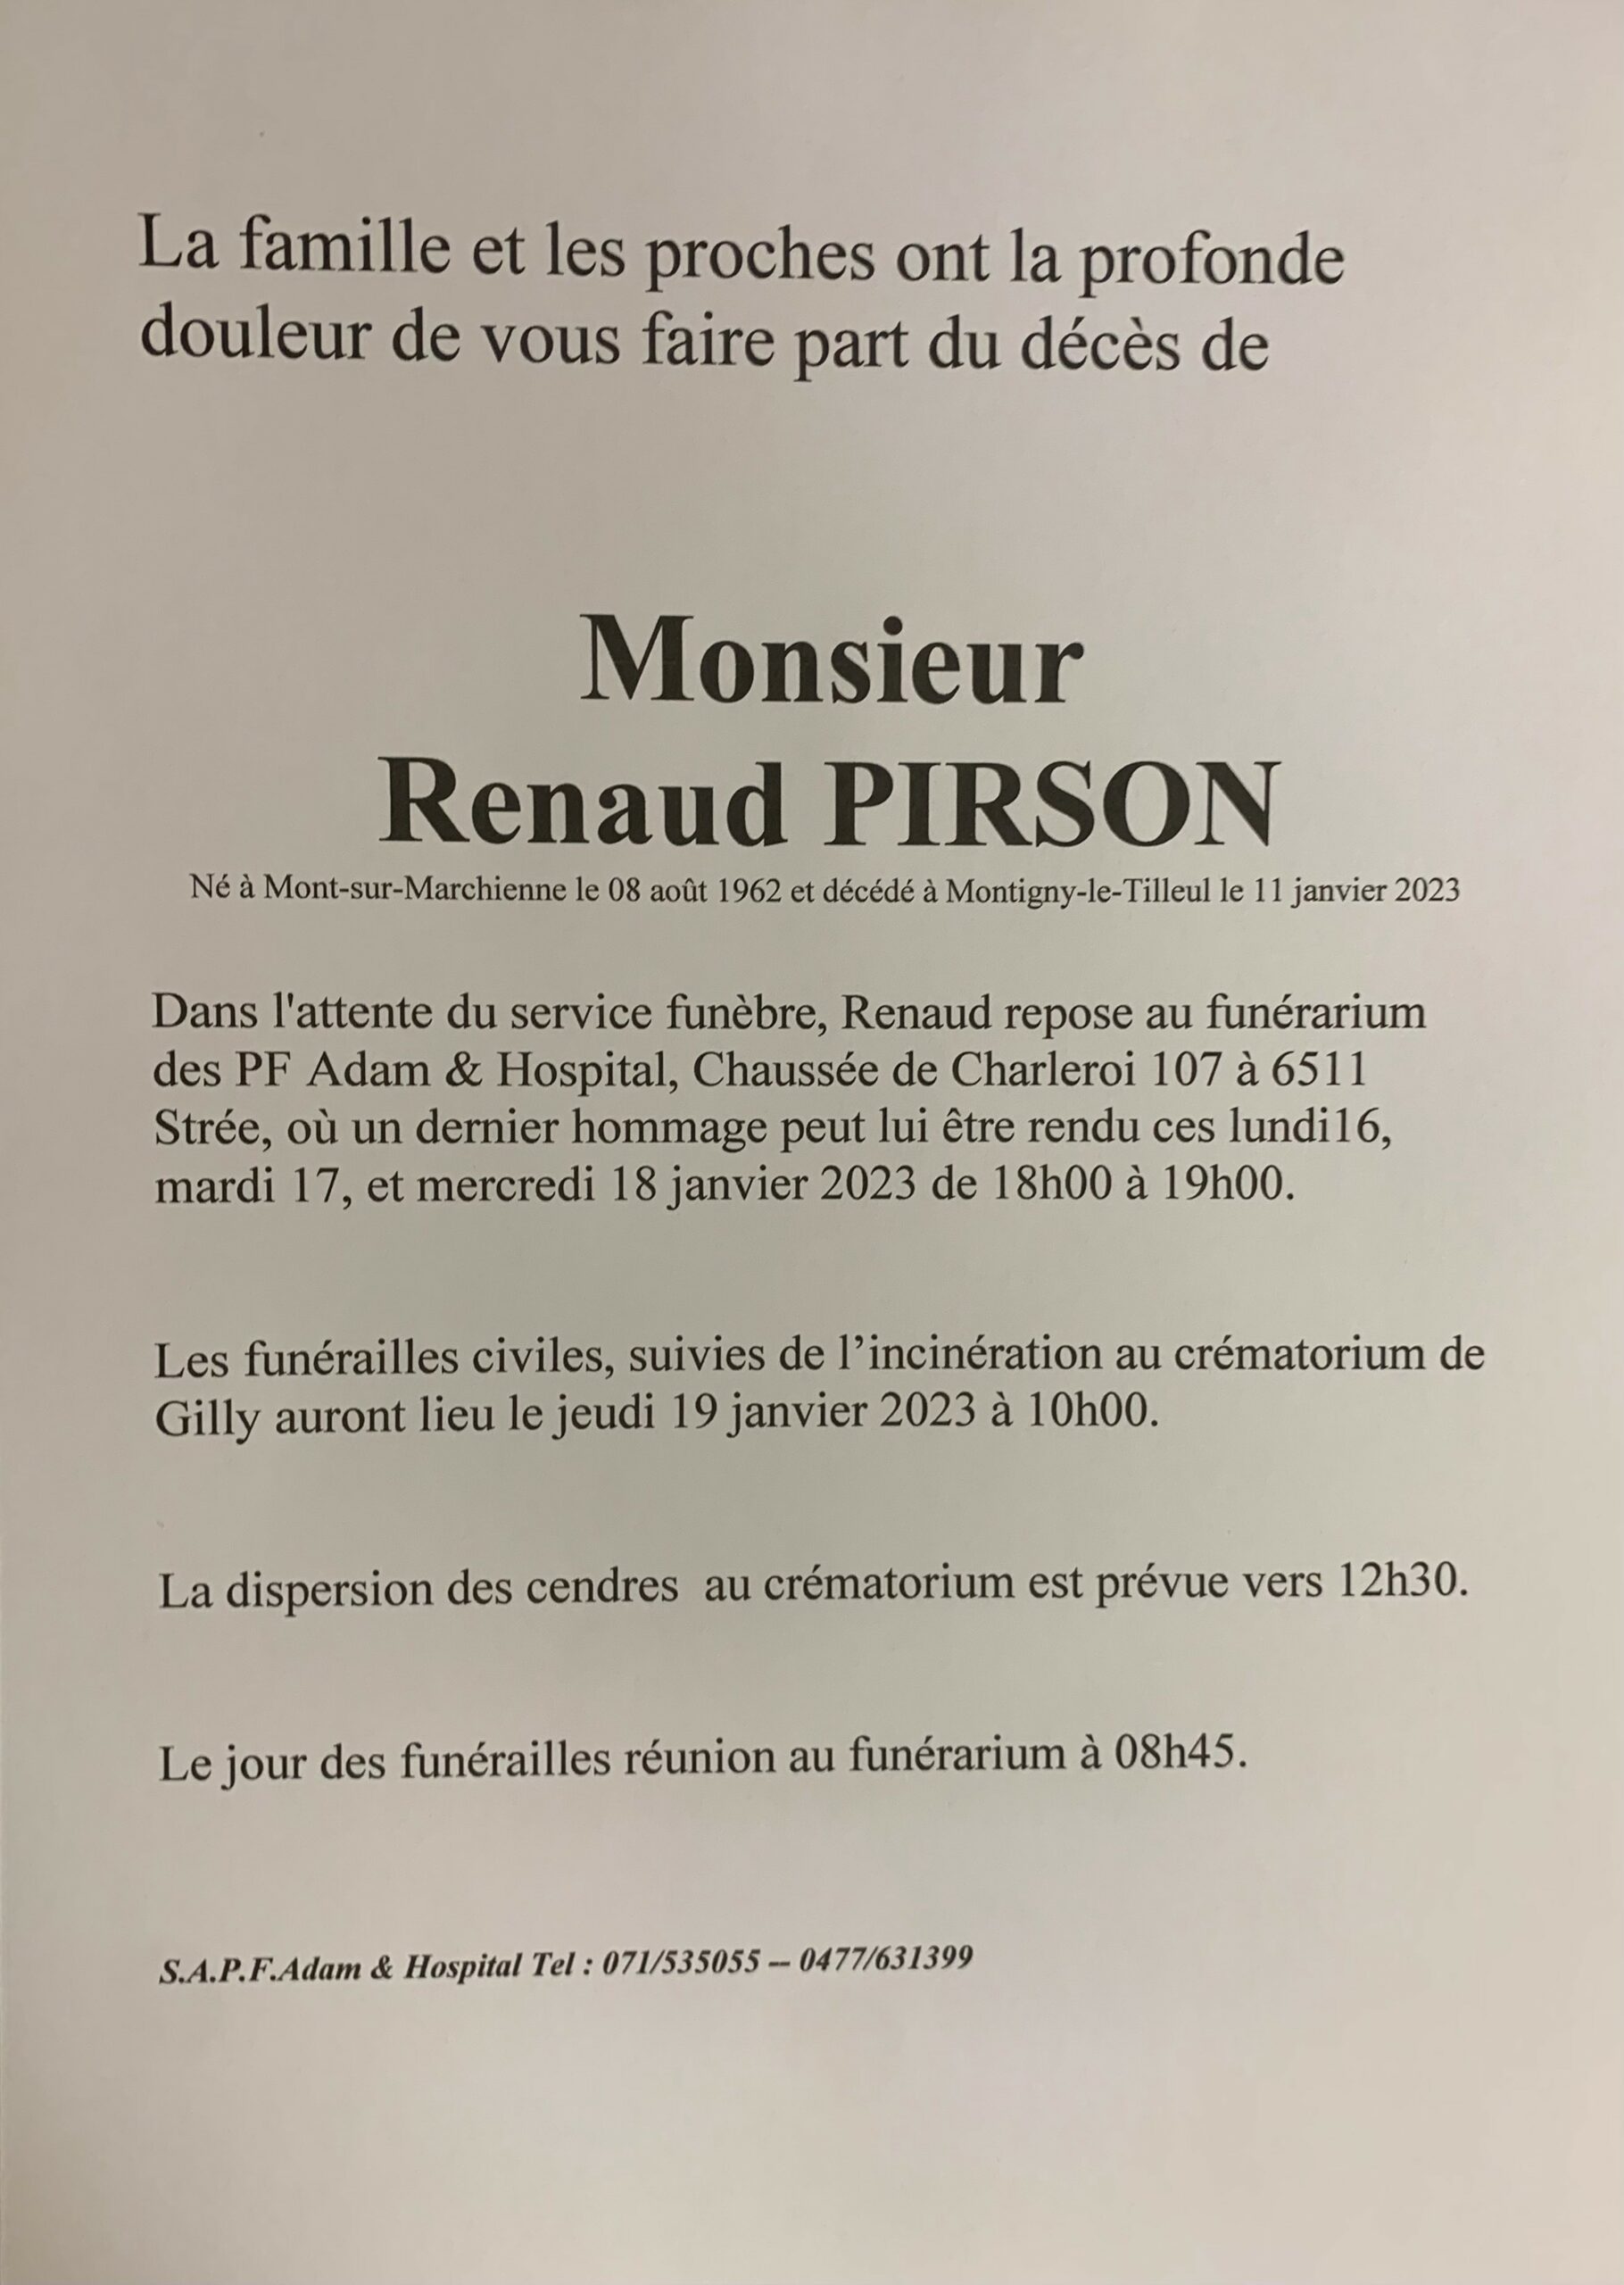 Monsieur Renaud PIRSON scaled | Funérailles Adam Hospital